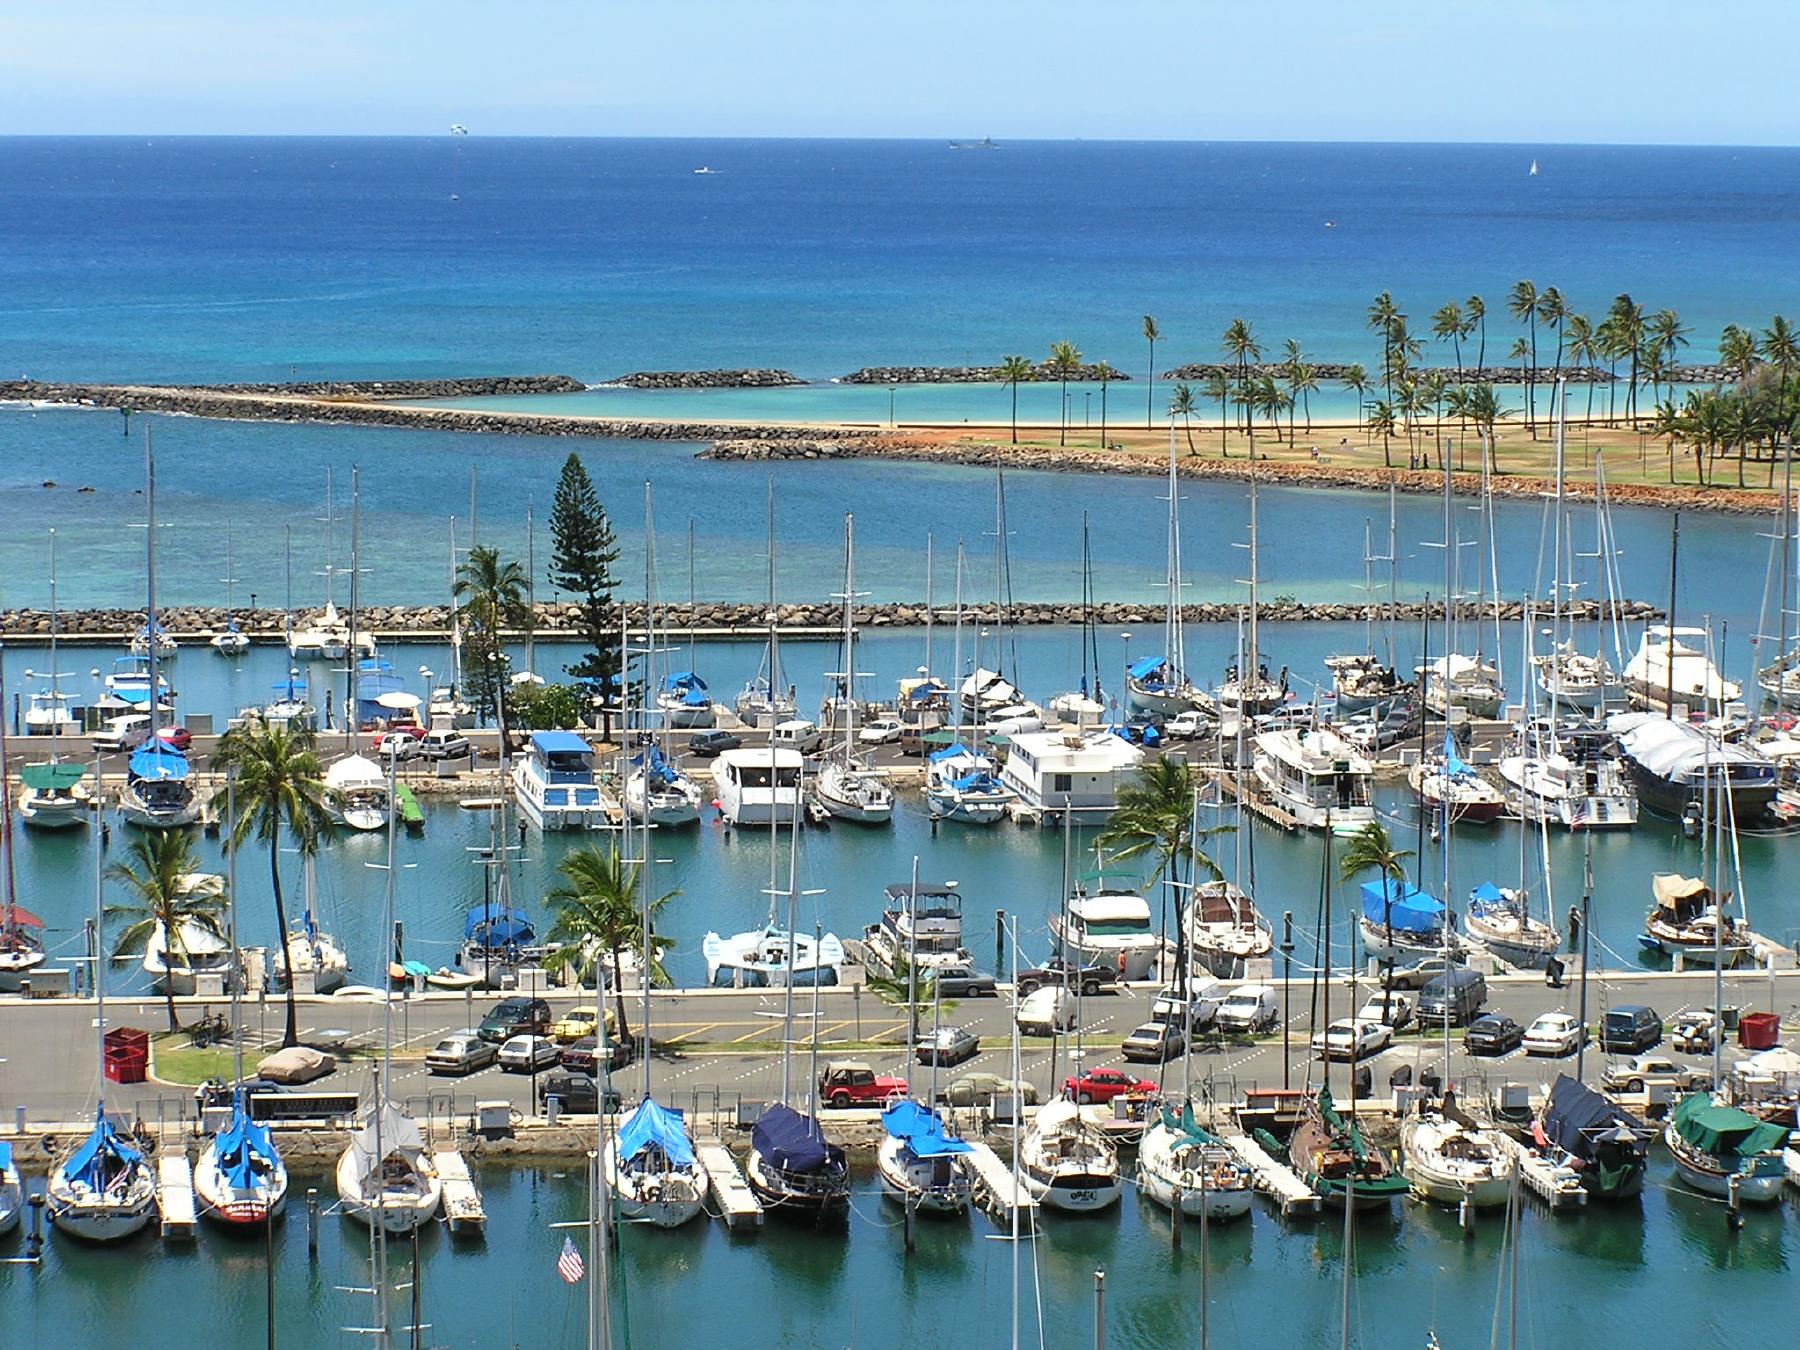 File:Ala Wai Harbor, Honolulu.jpg - Wikimedia Commons